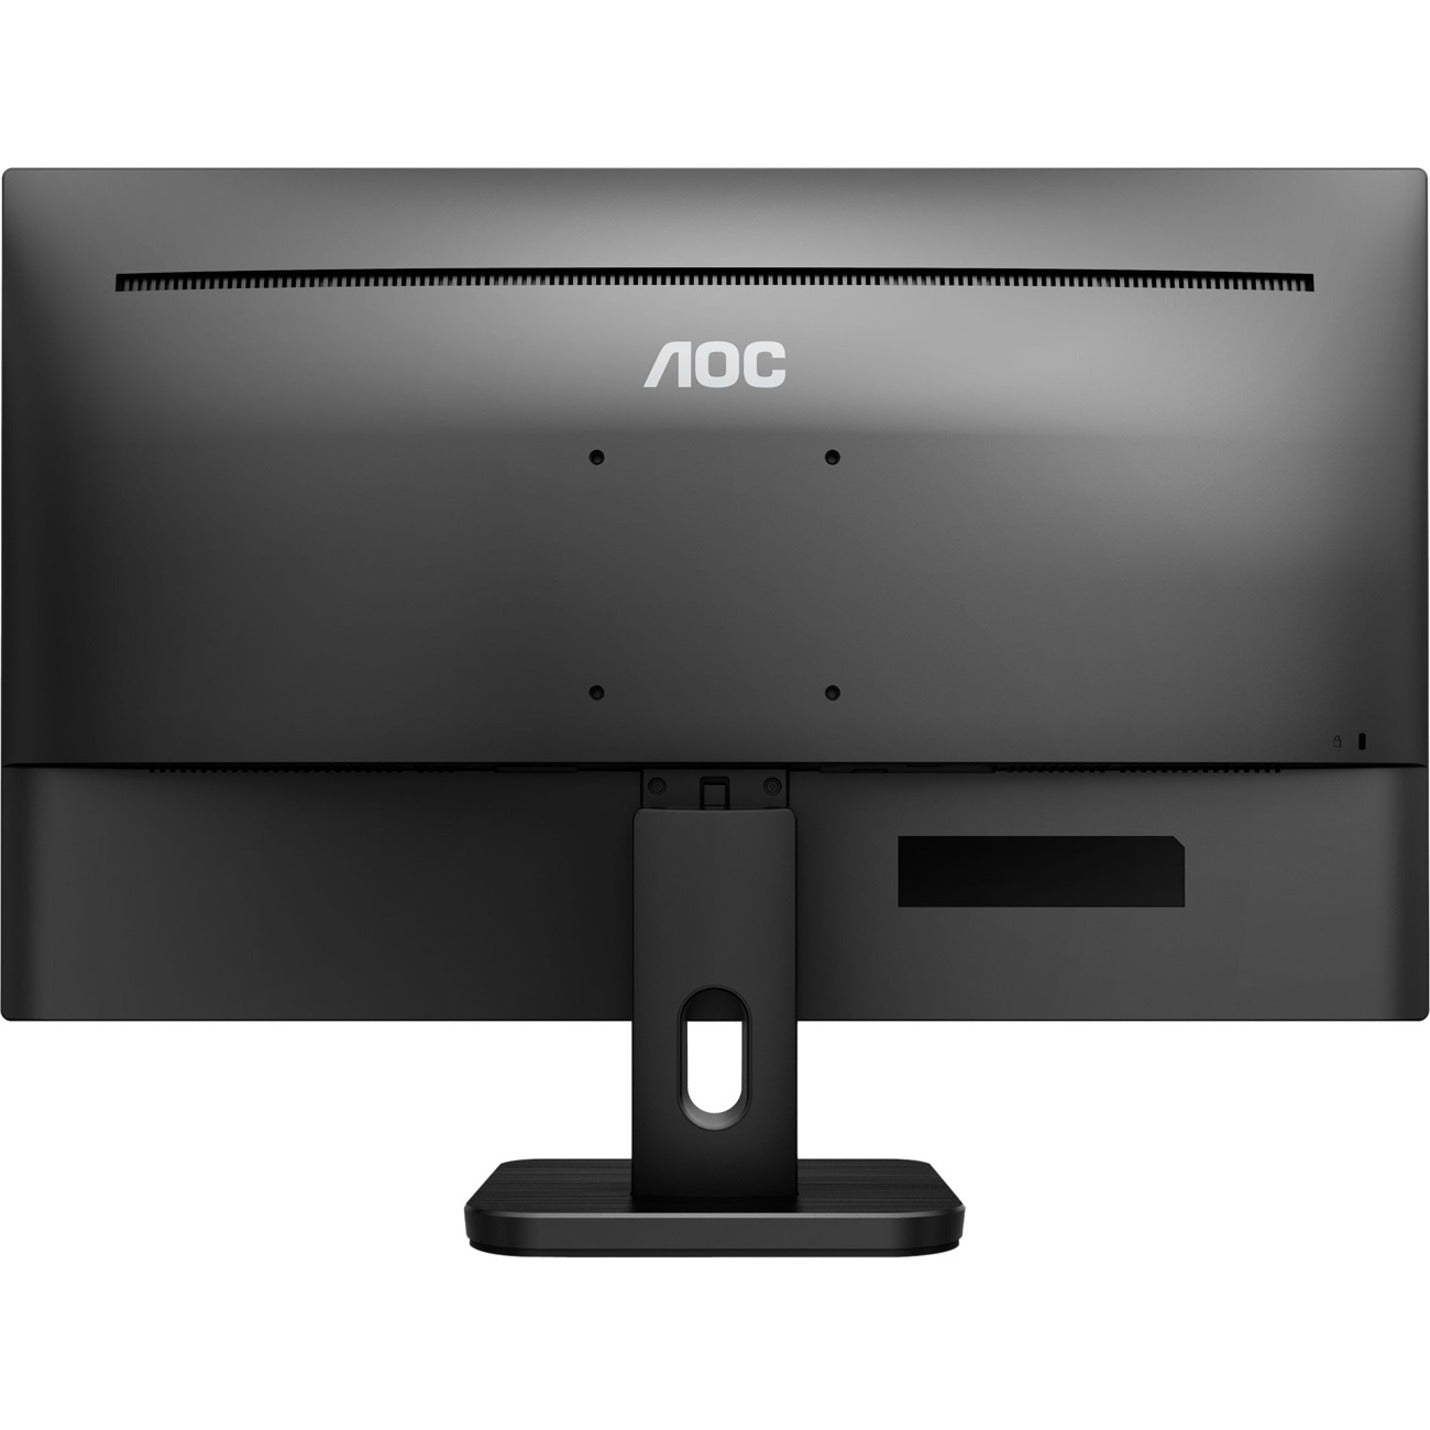 AOC 27E1H 27" Full HD LCD Monitor - 16:9 [Discontinued]